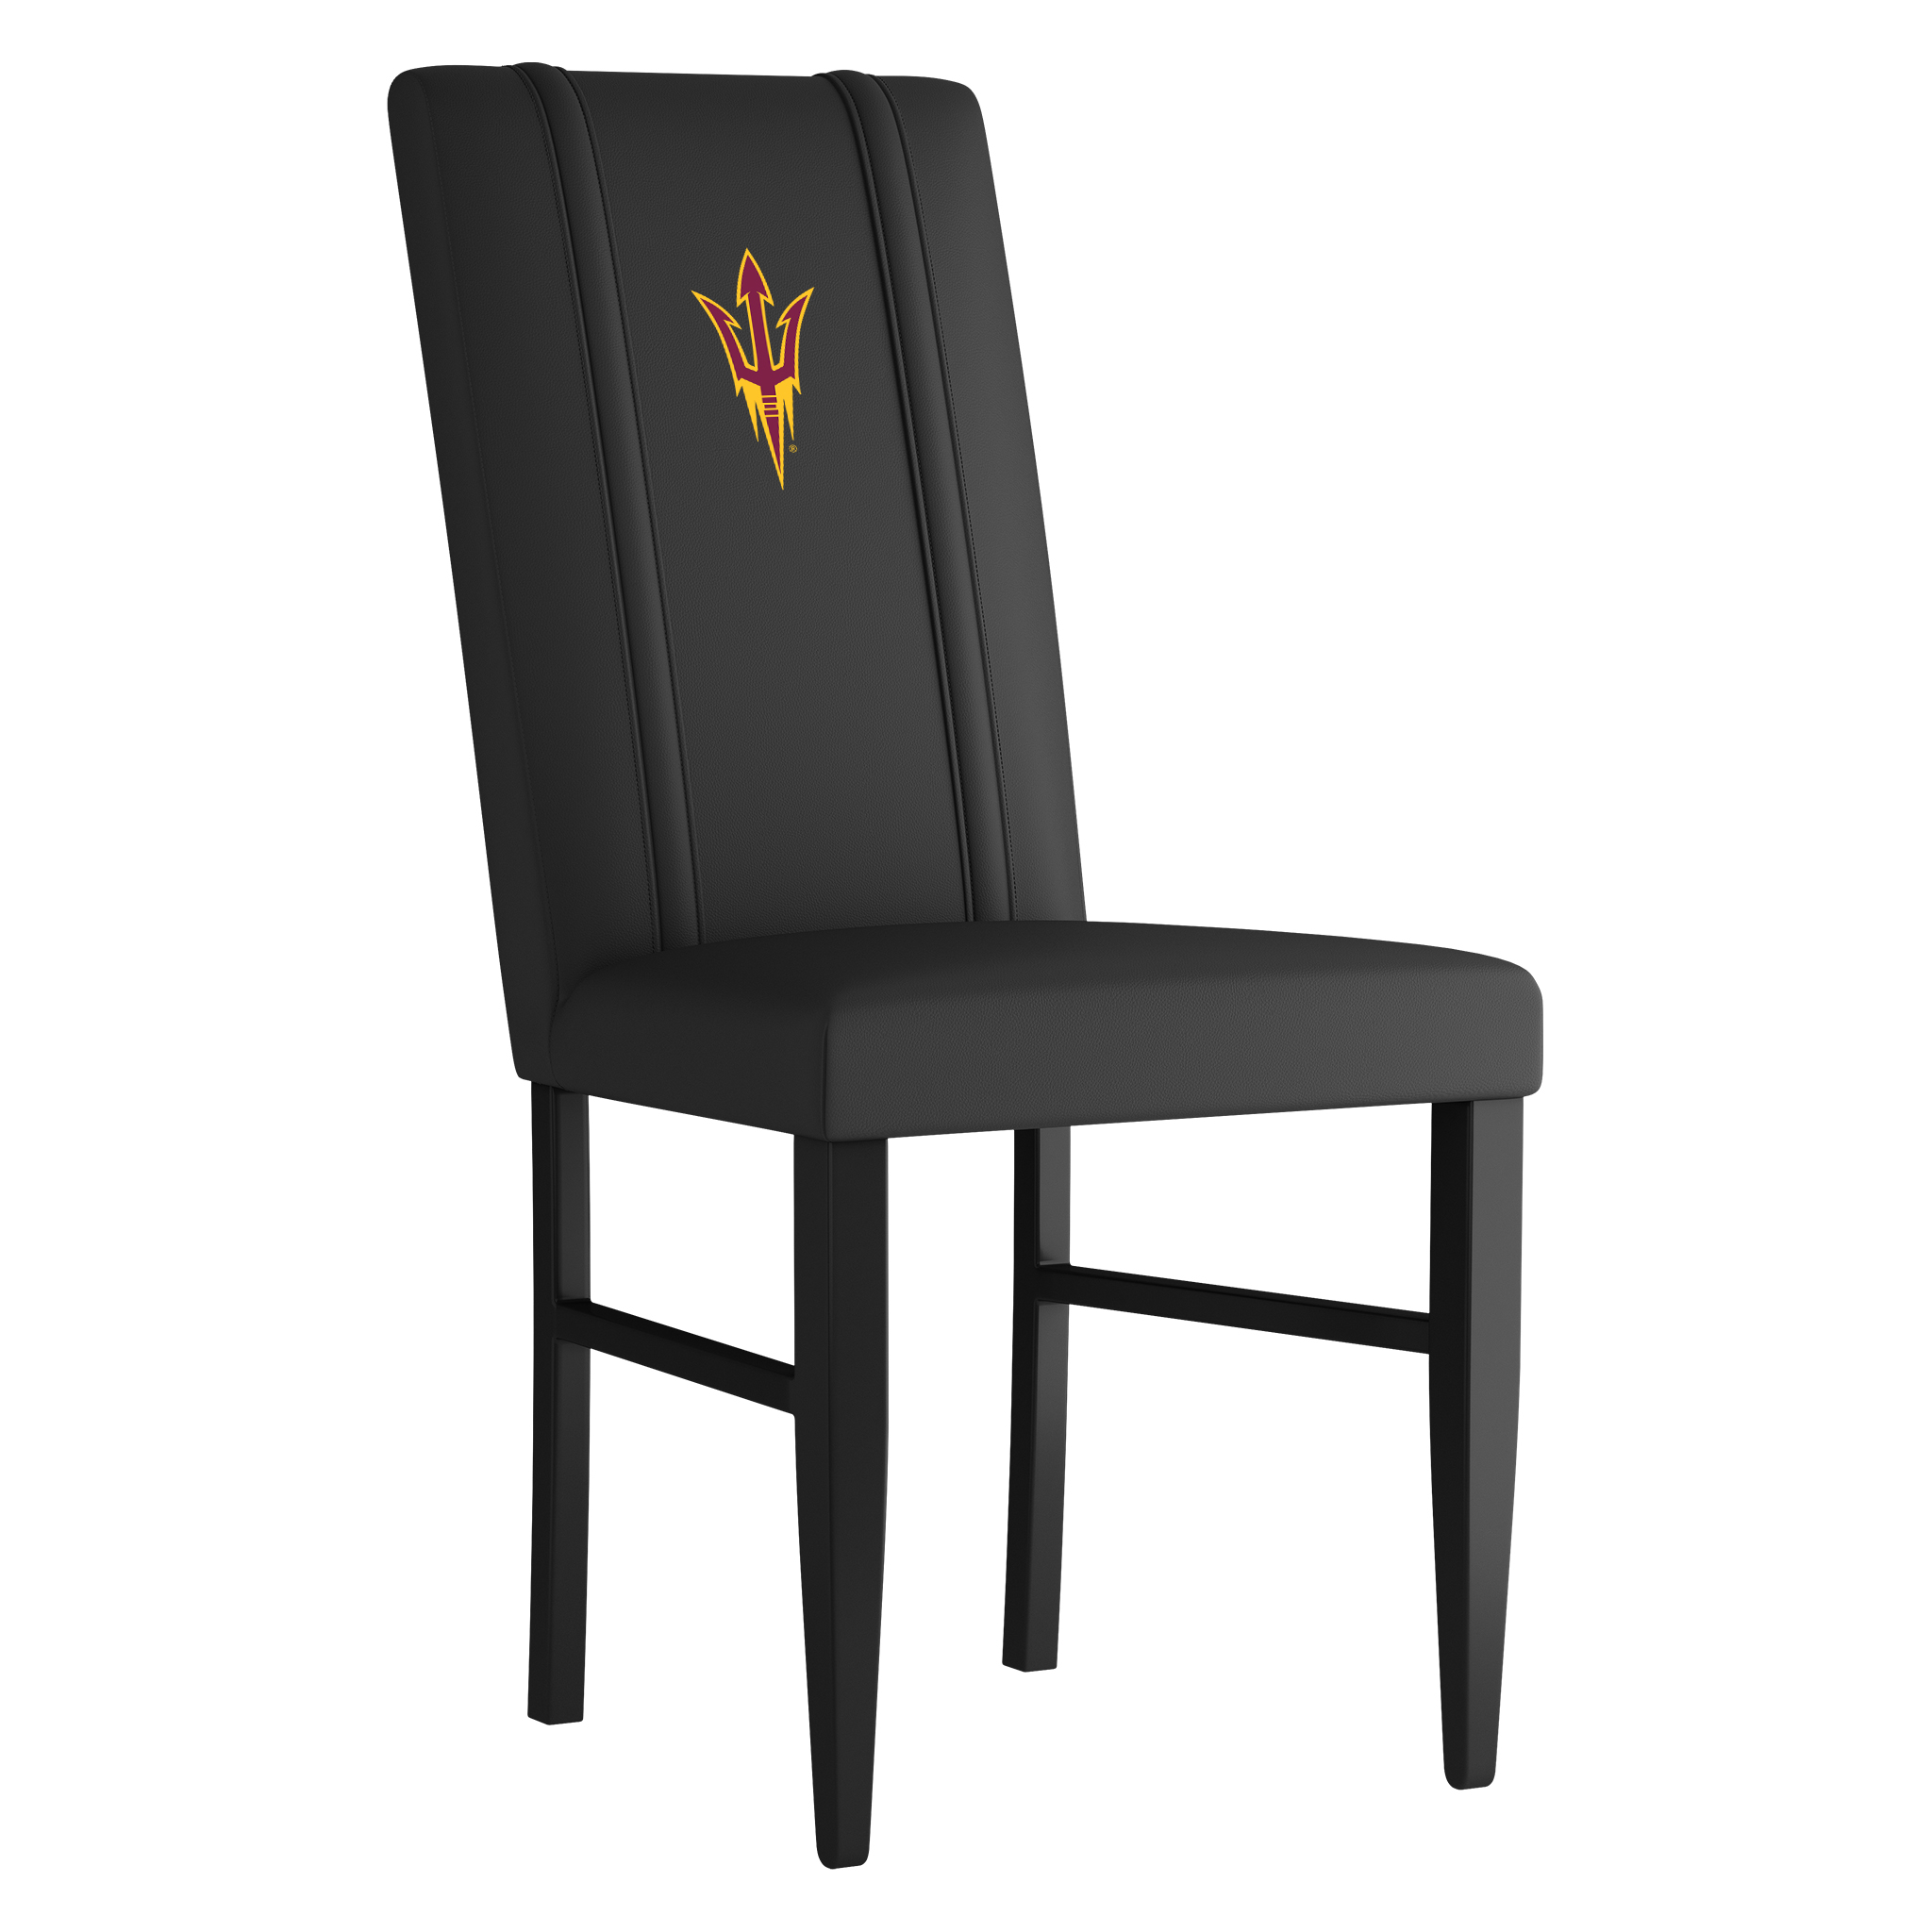 Arizona State Sundevils Side Chair 2000 With Arizona State Sundevils Logo